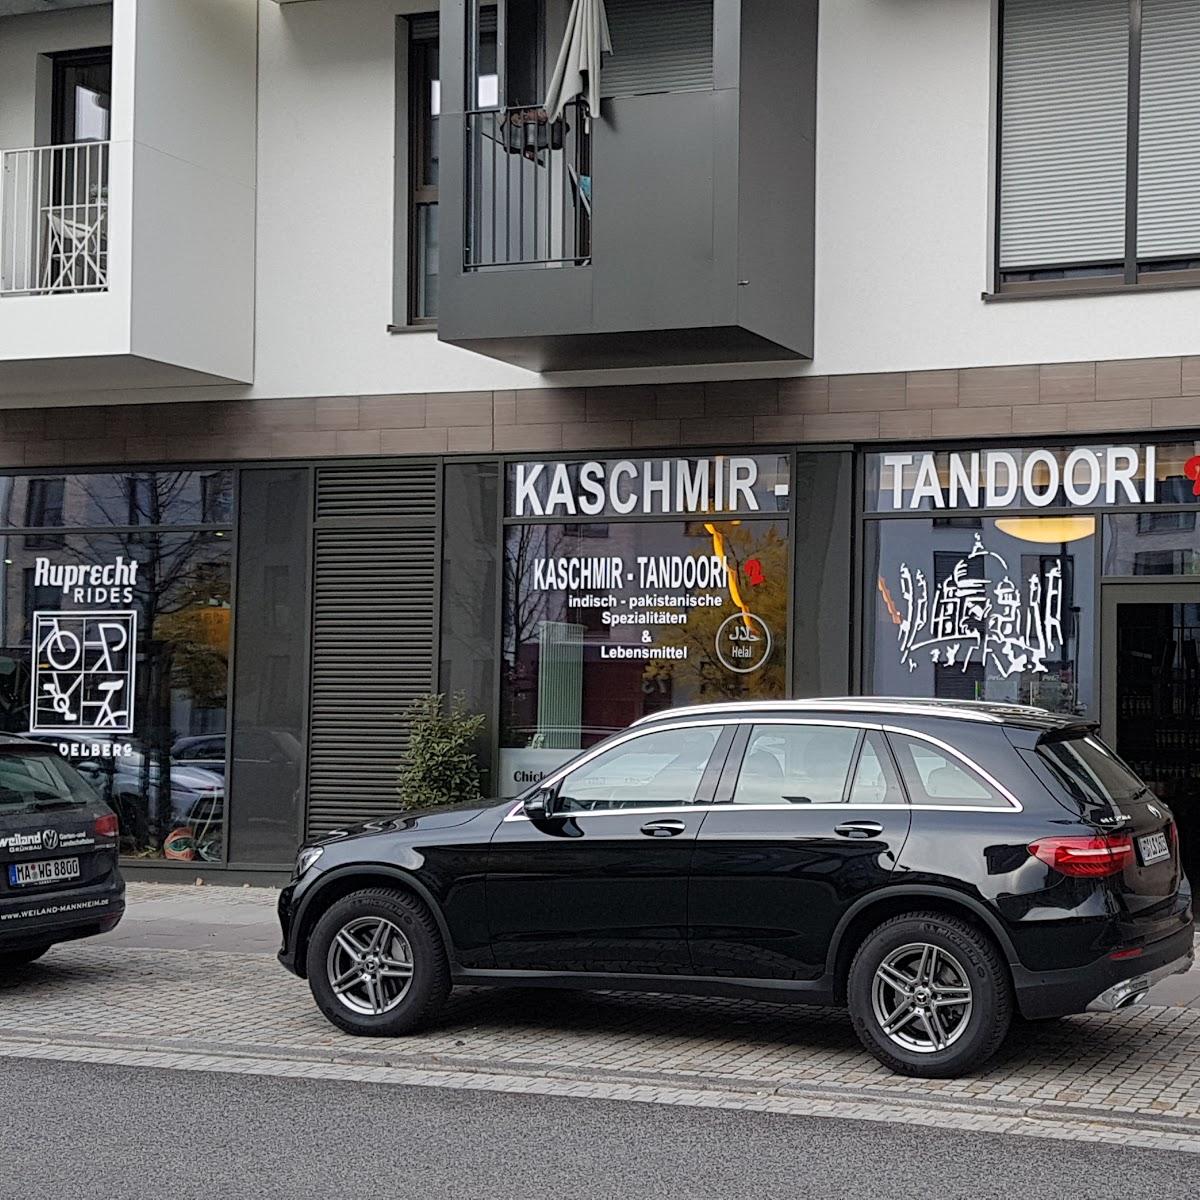 Restaurant "Kaschmir - Tandoori 2(halal)" in Heidelberg